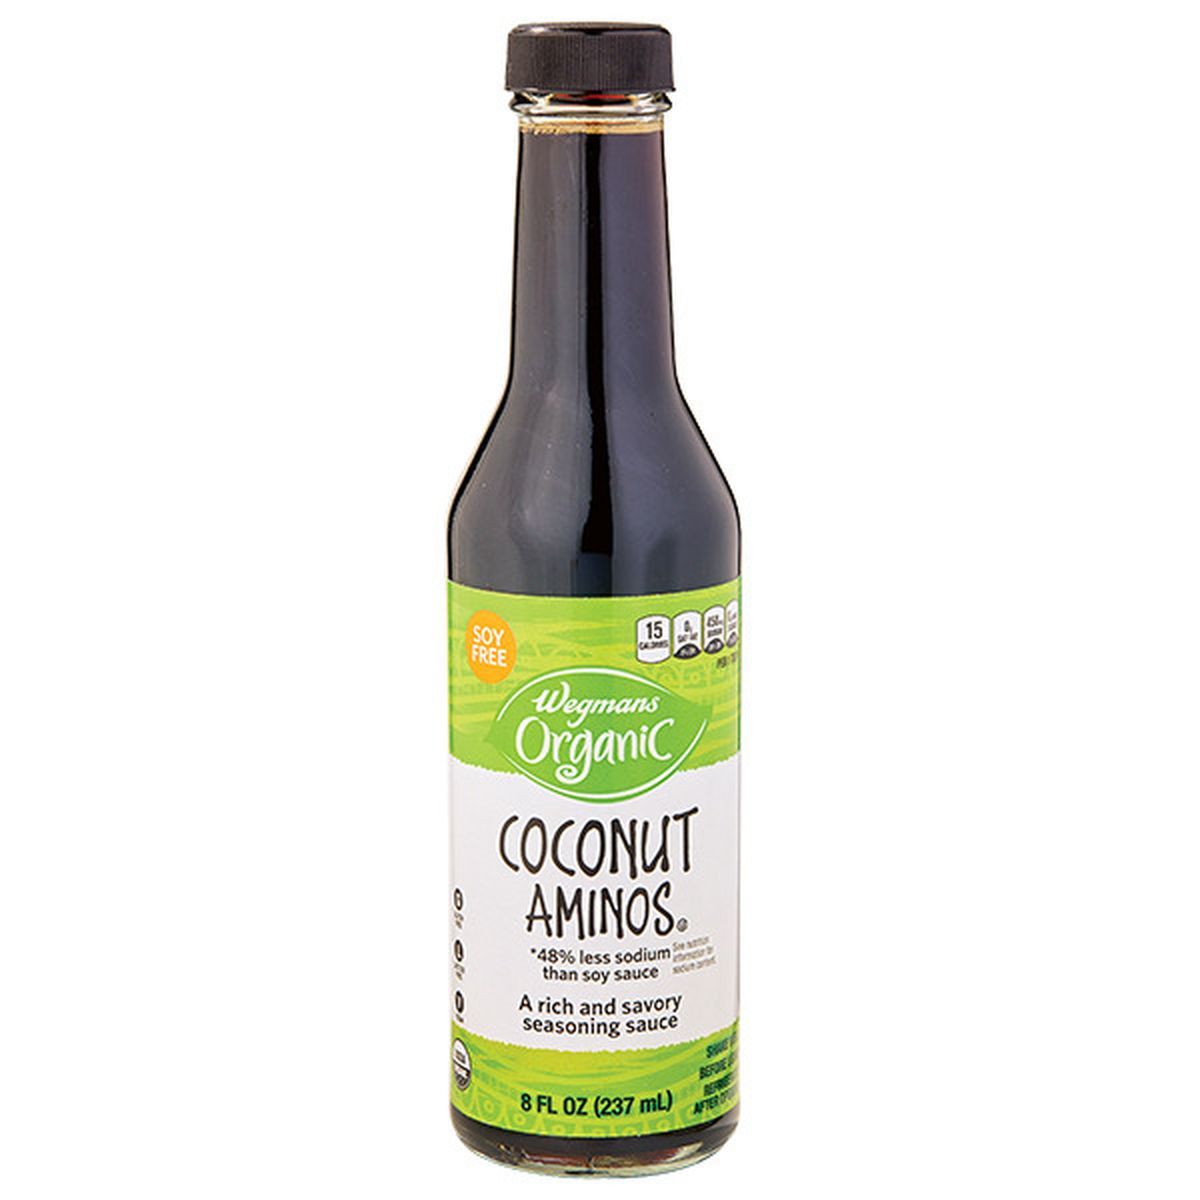 Calories in Wegmans Organic Coconut Aminos Sauce